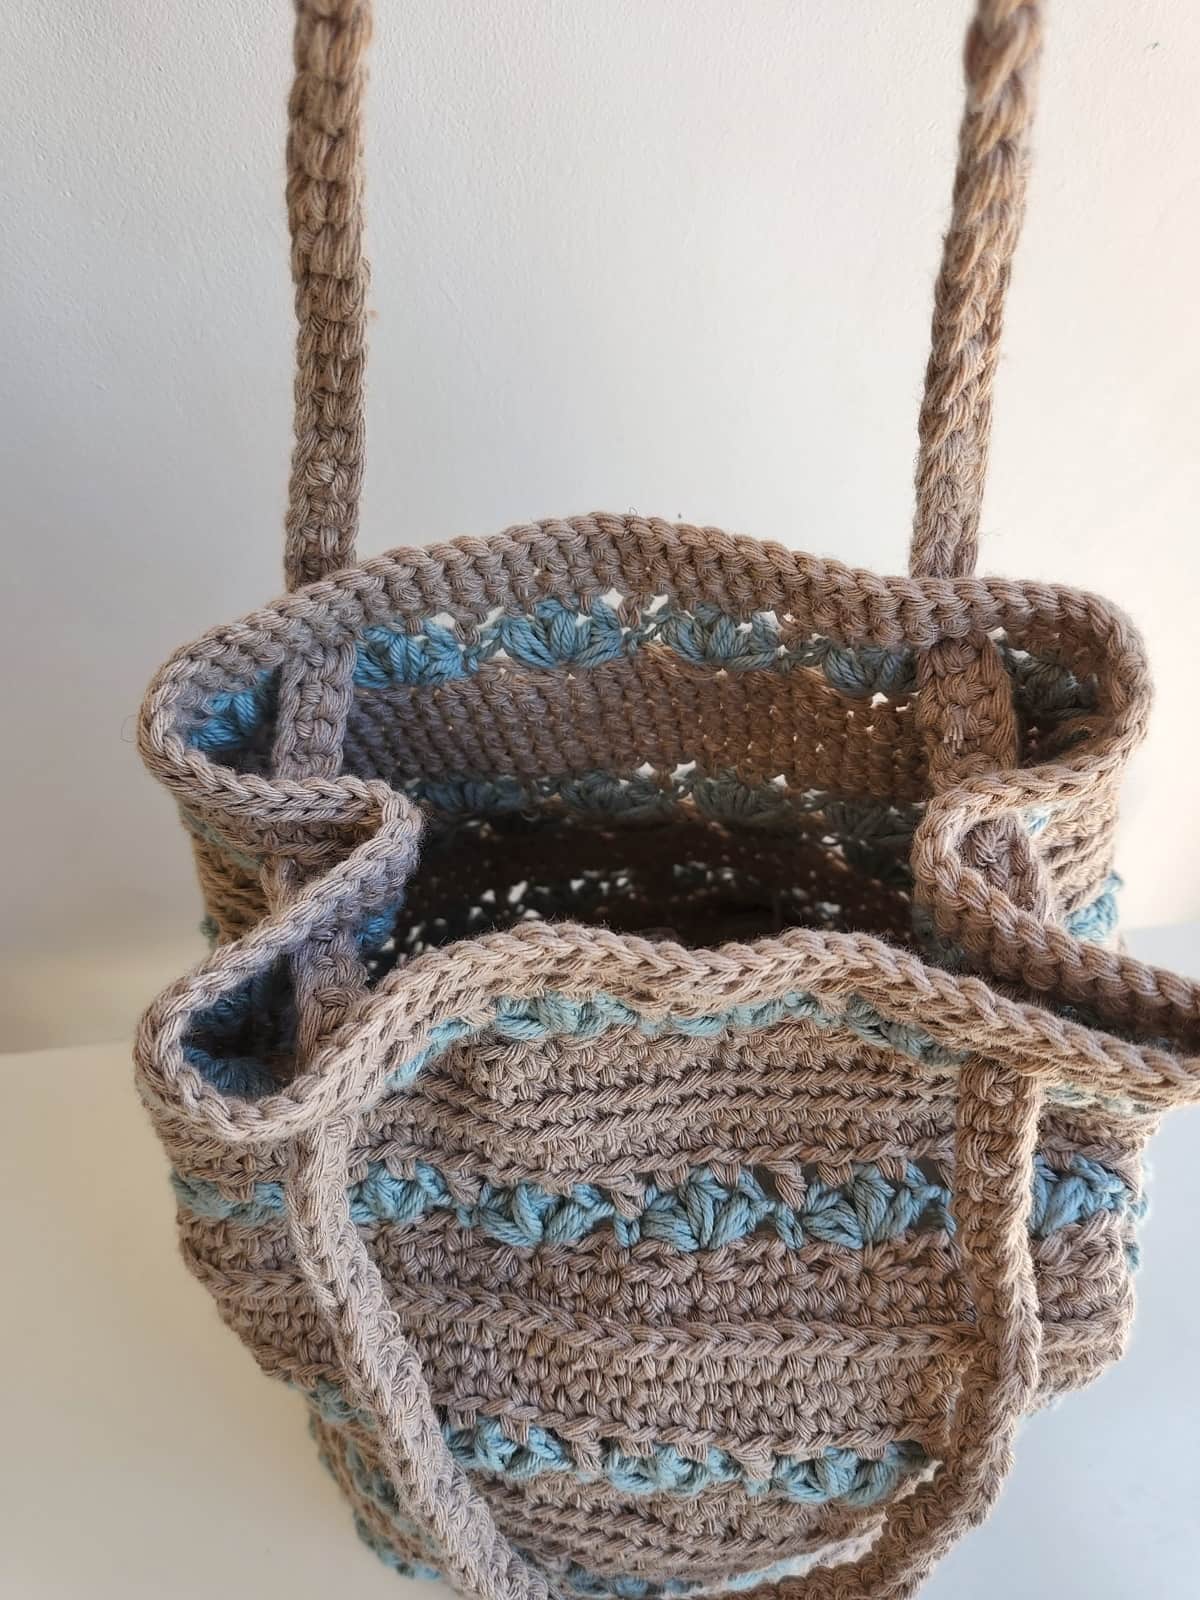 Crochet Bag Acrylic Yarn.Crochet Bucket Bag Pattern Free. V Puff